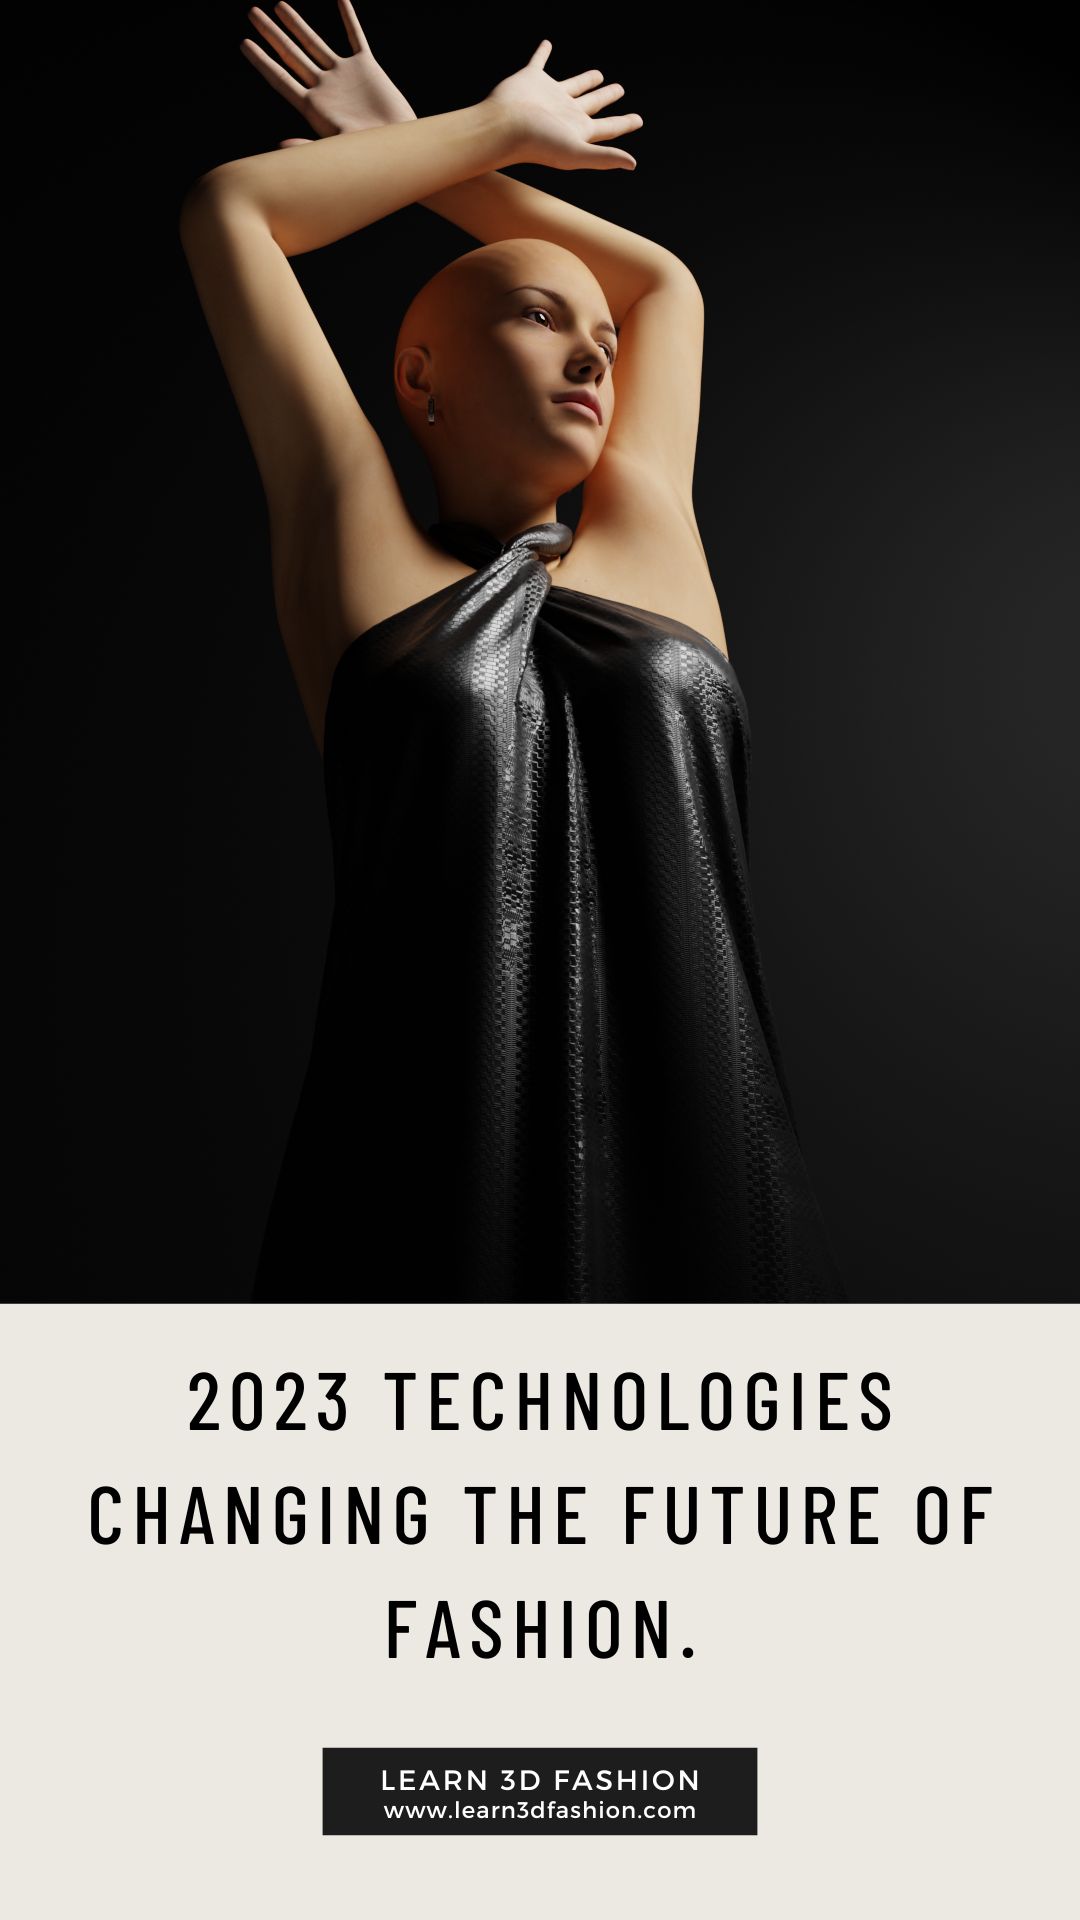 2023 technologies changing future of fashion